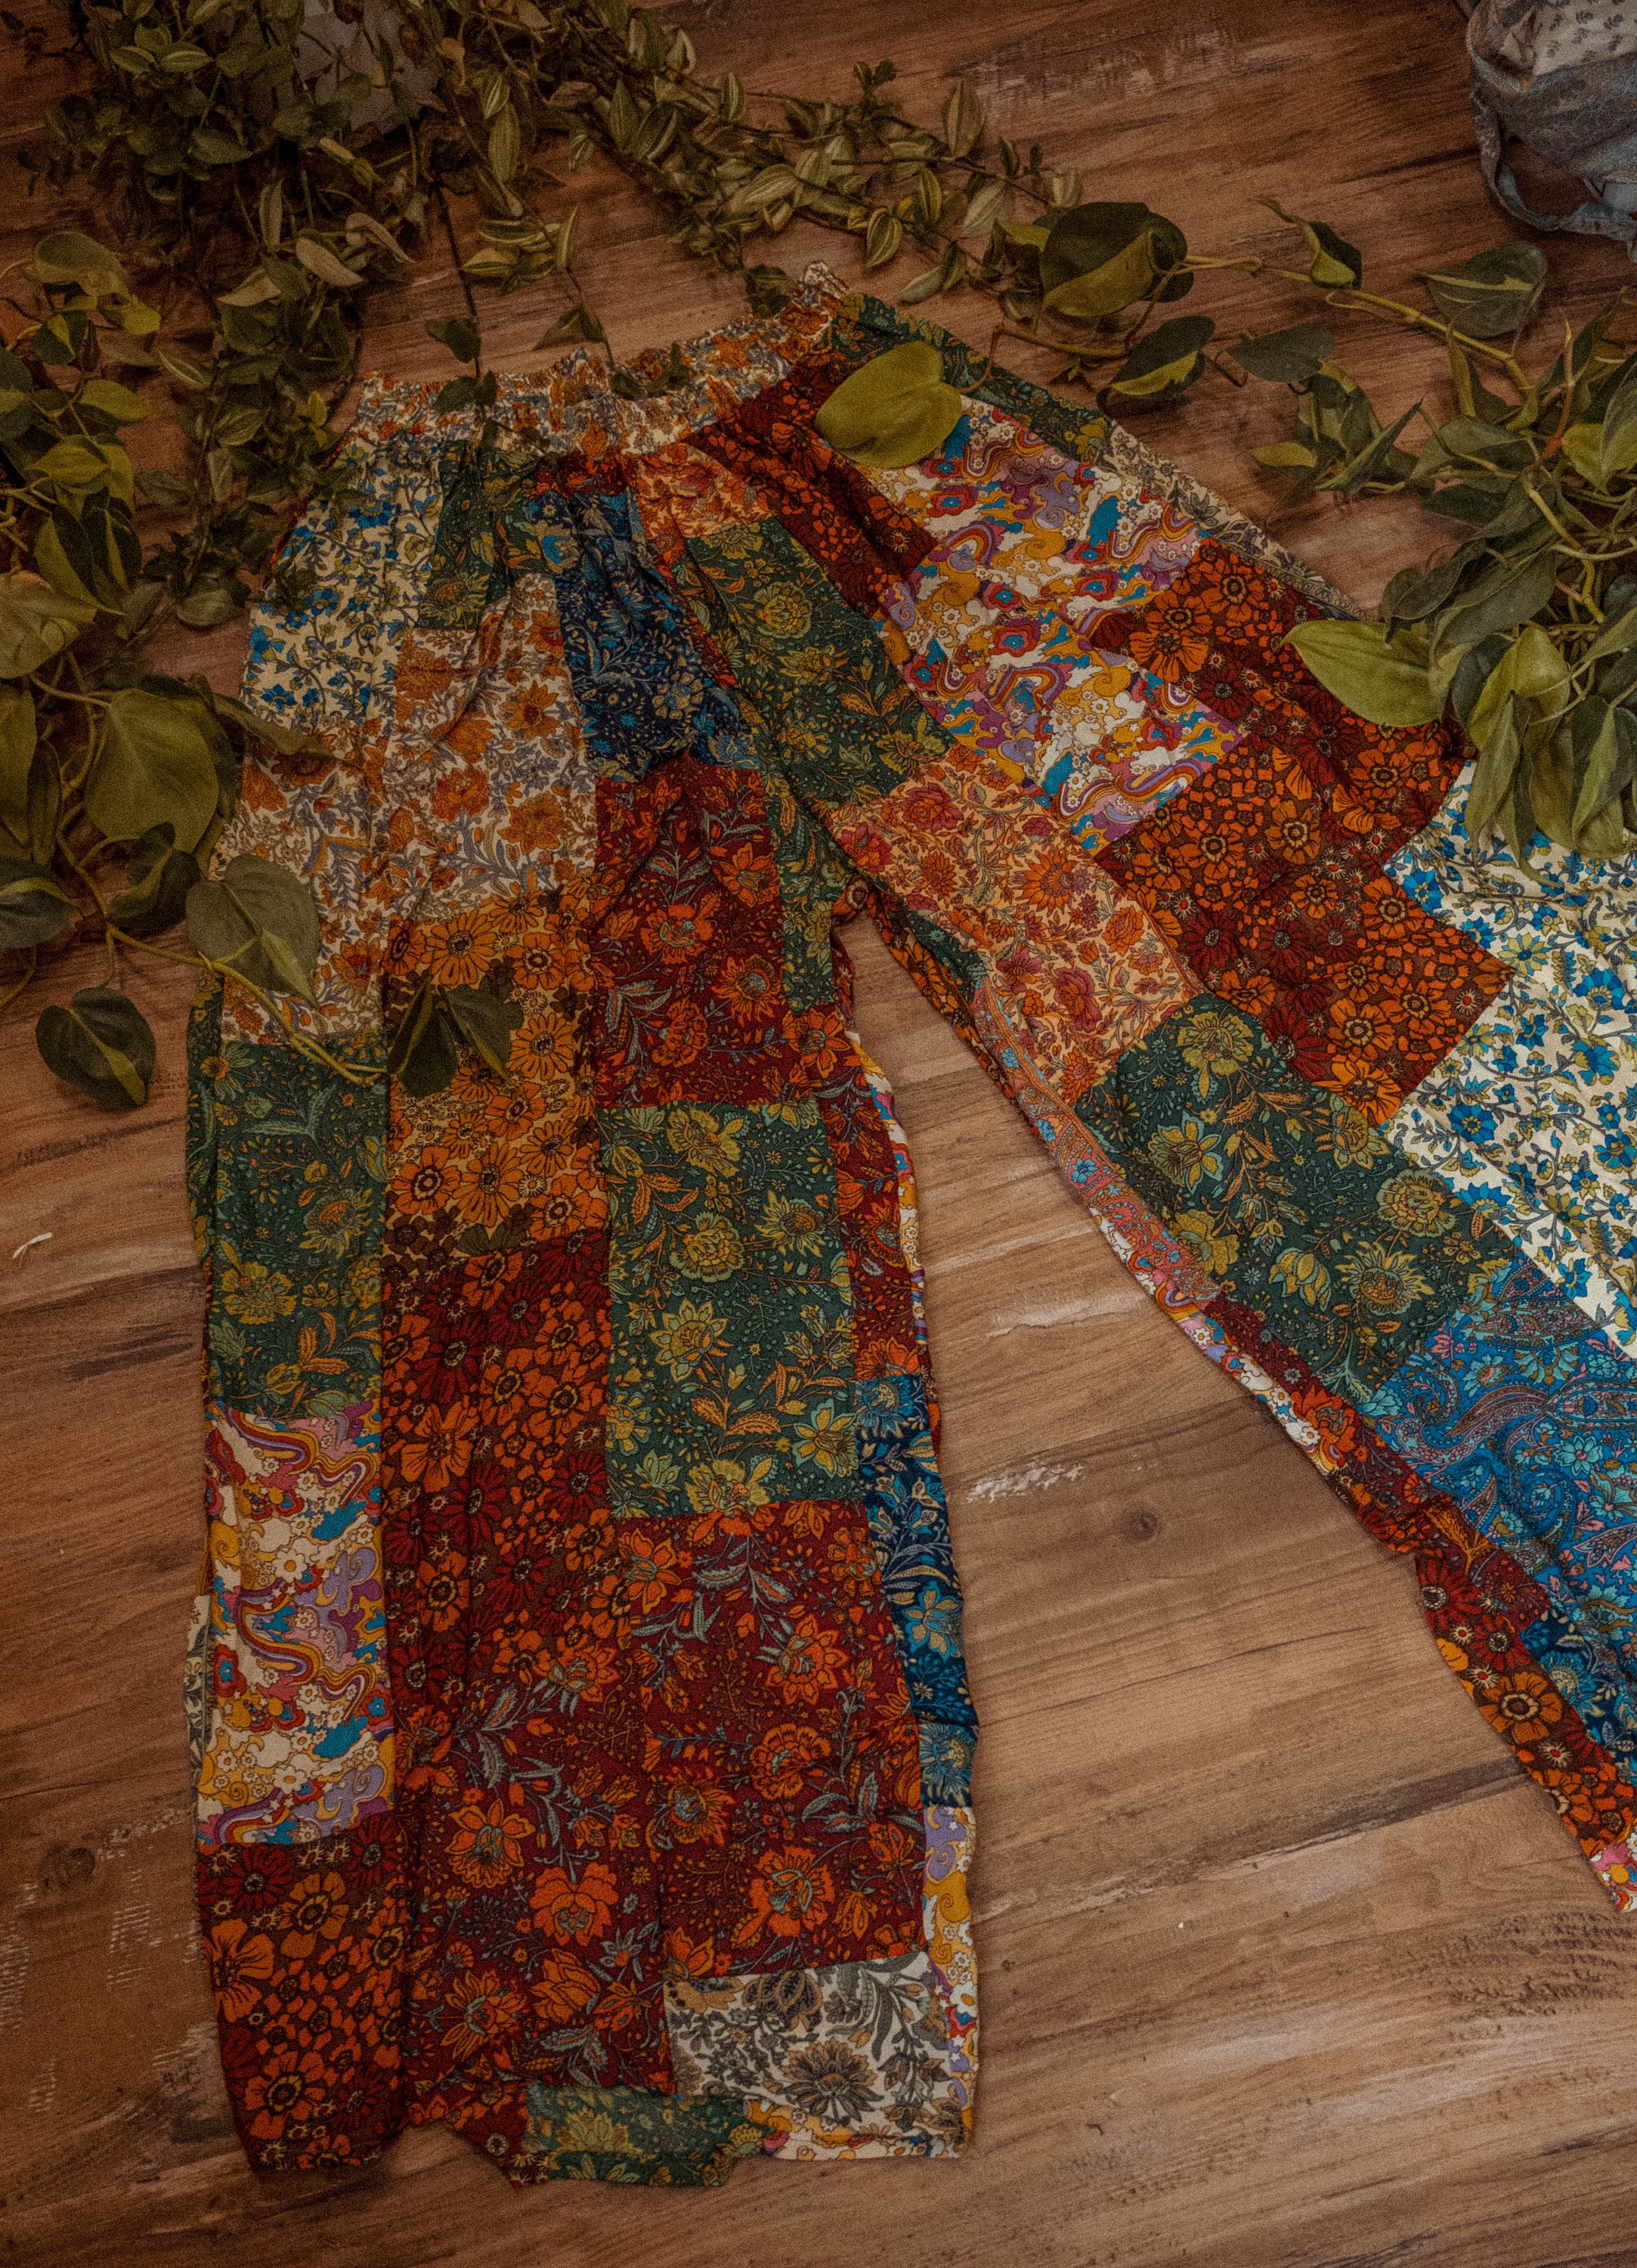 Devi printed wide-leg silk pants in multicoloured - Zimmermann